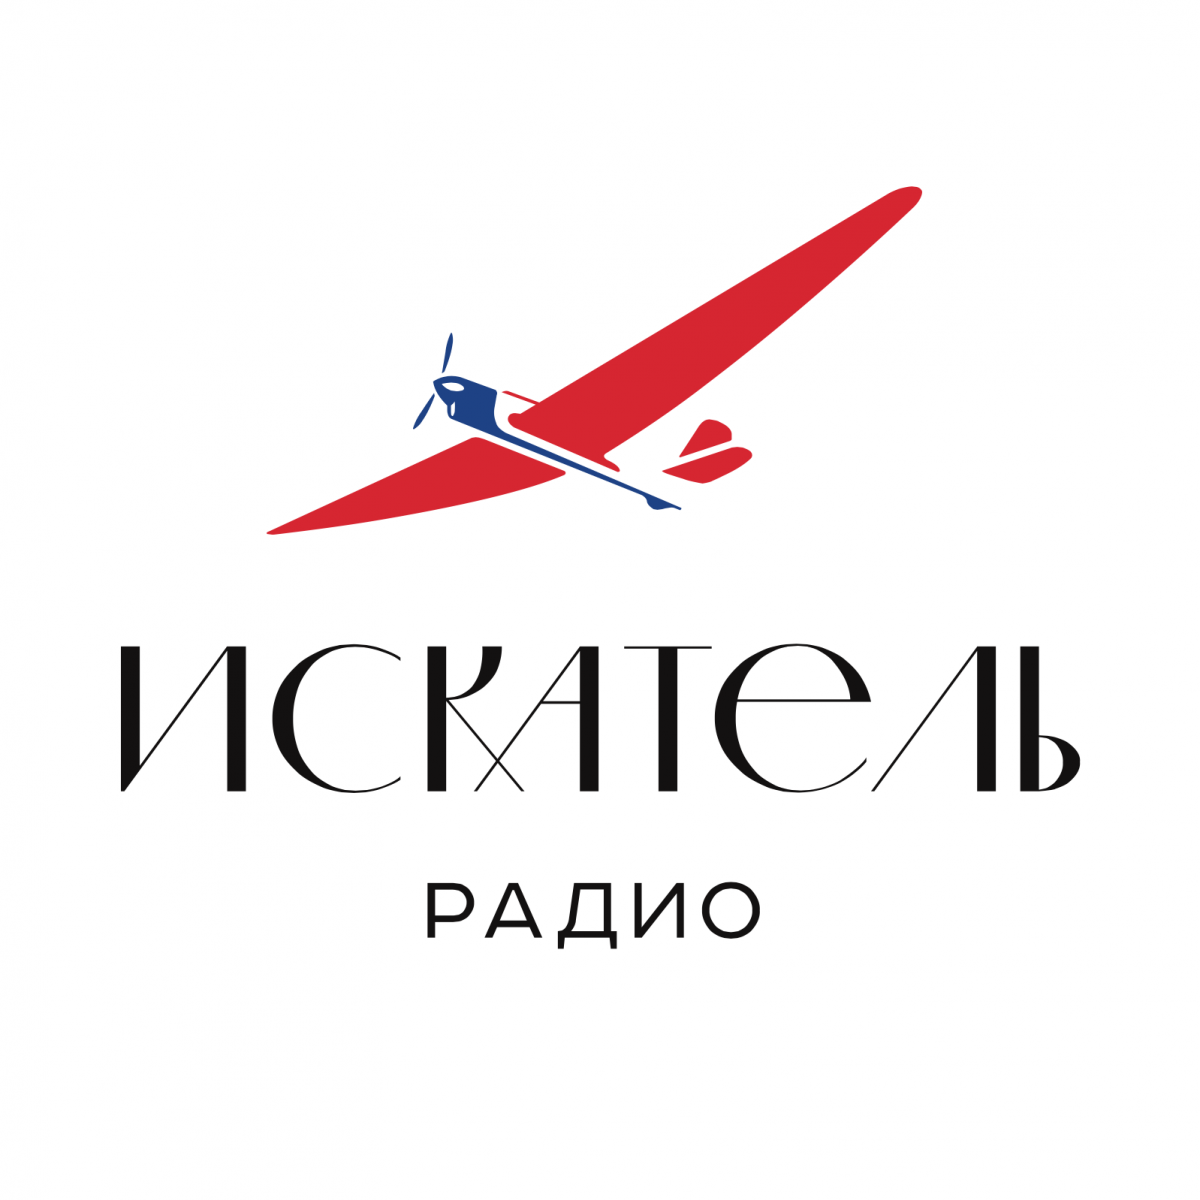 iskatel-logo-colors.png